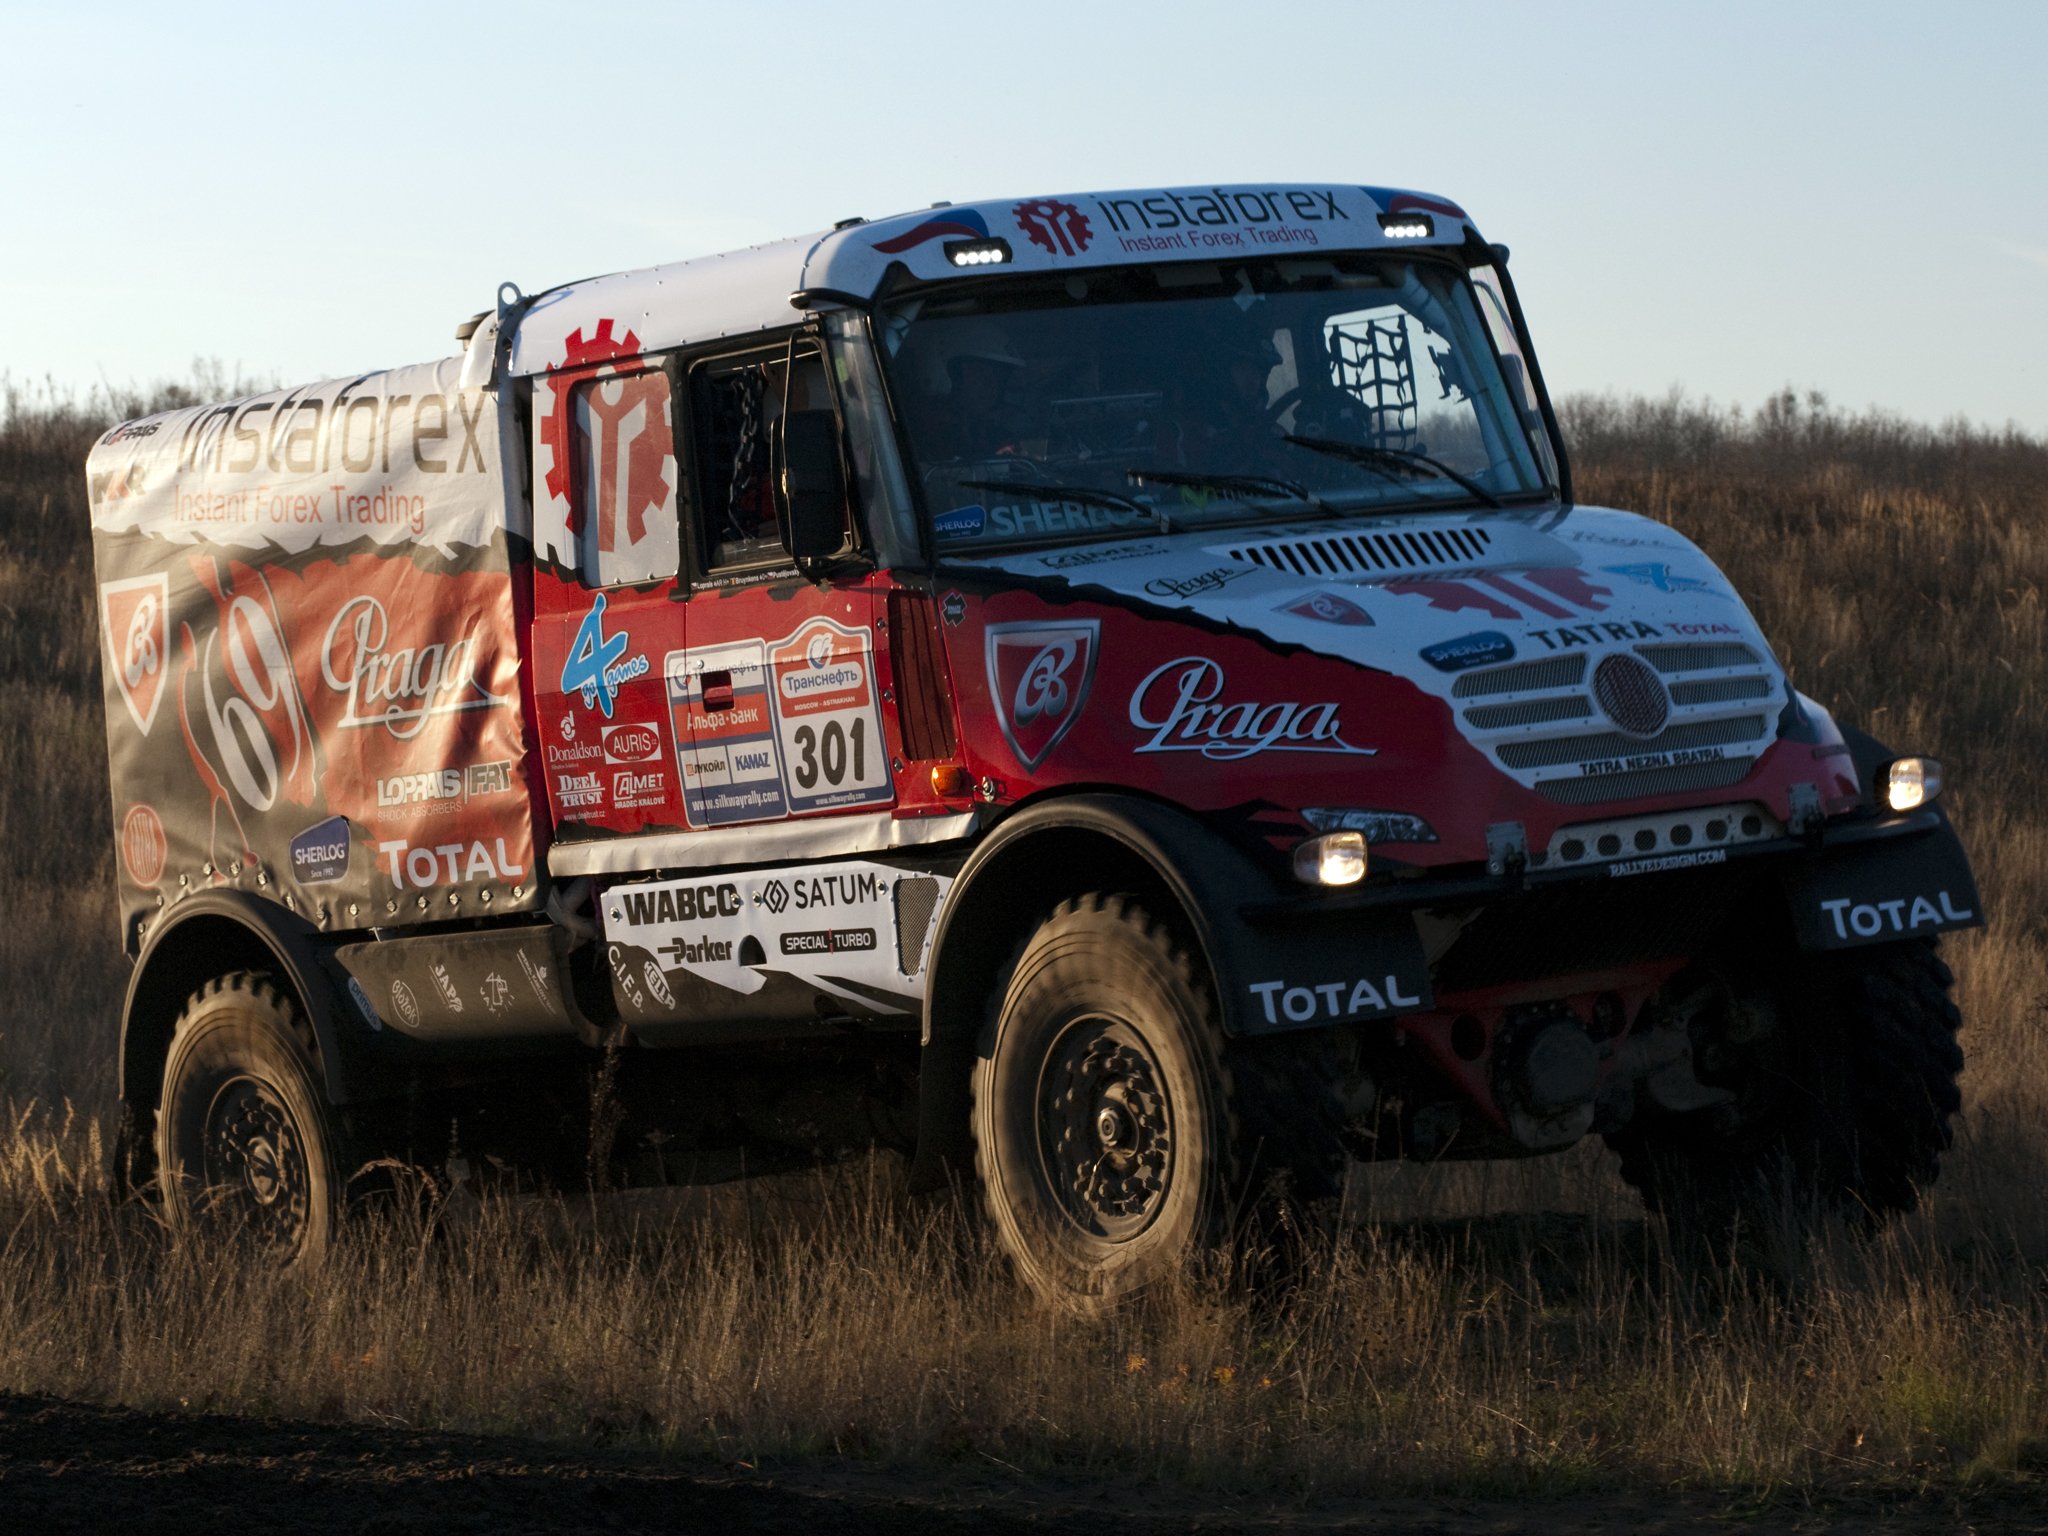 2014, Tatra, Yamal, Queen, 6 9, Evo ii, Semi, Tractor, Rally, Offroad, Race, Racing Wallpaper